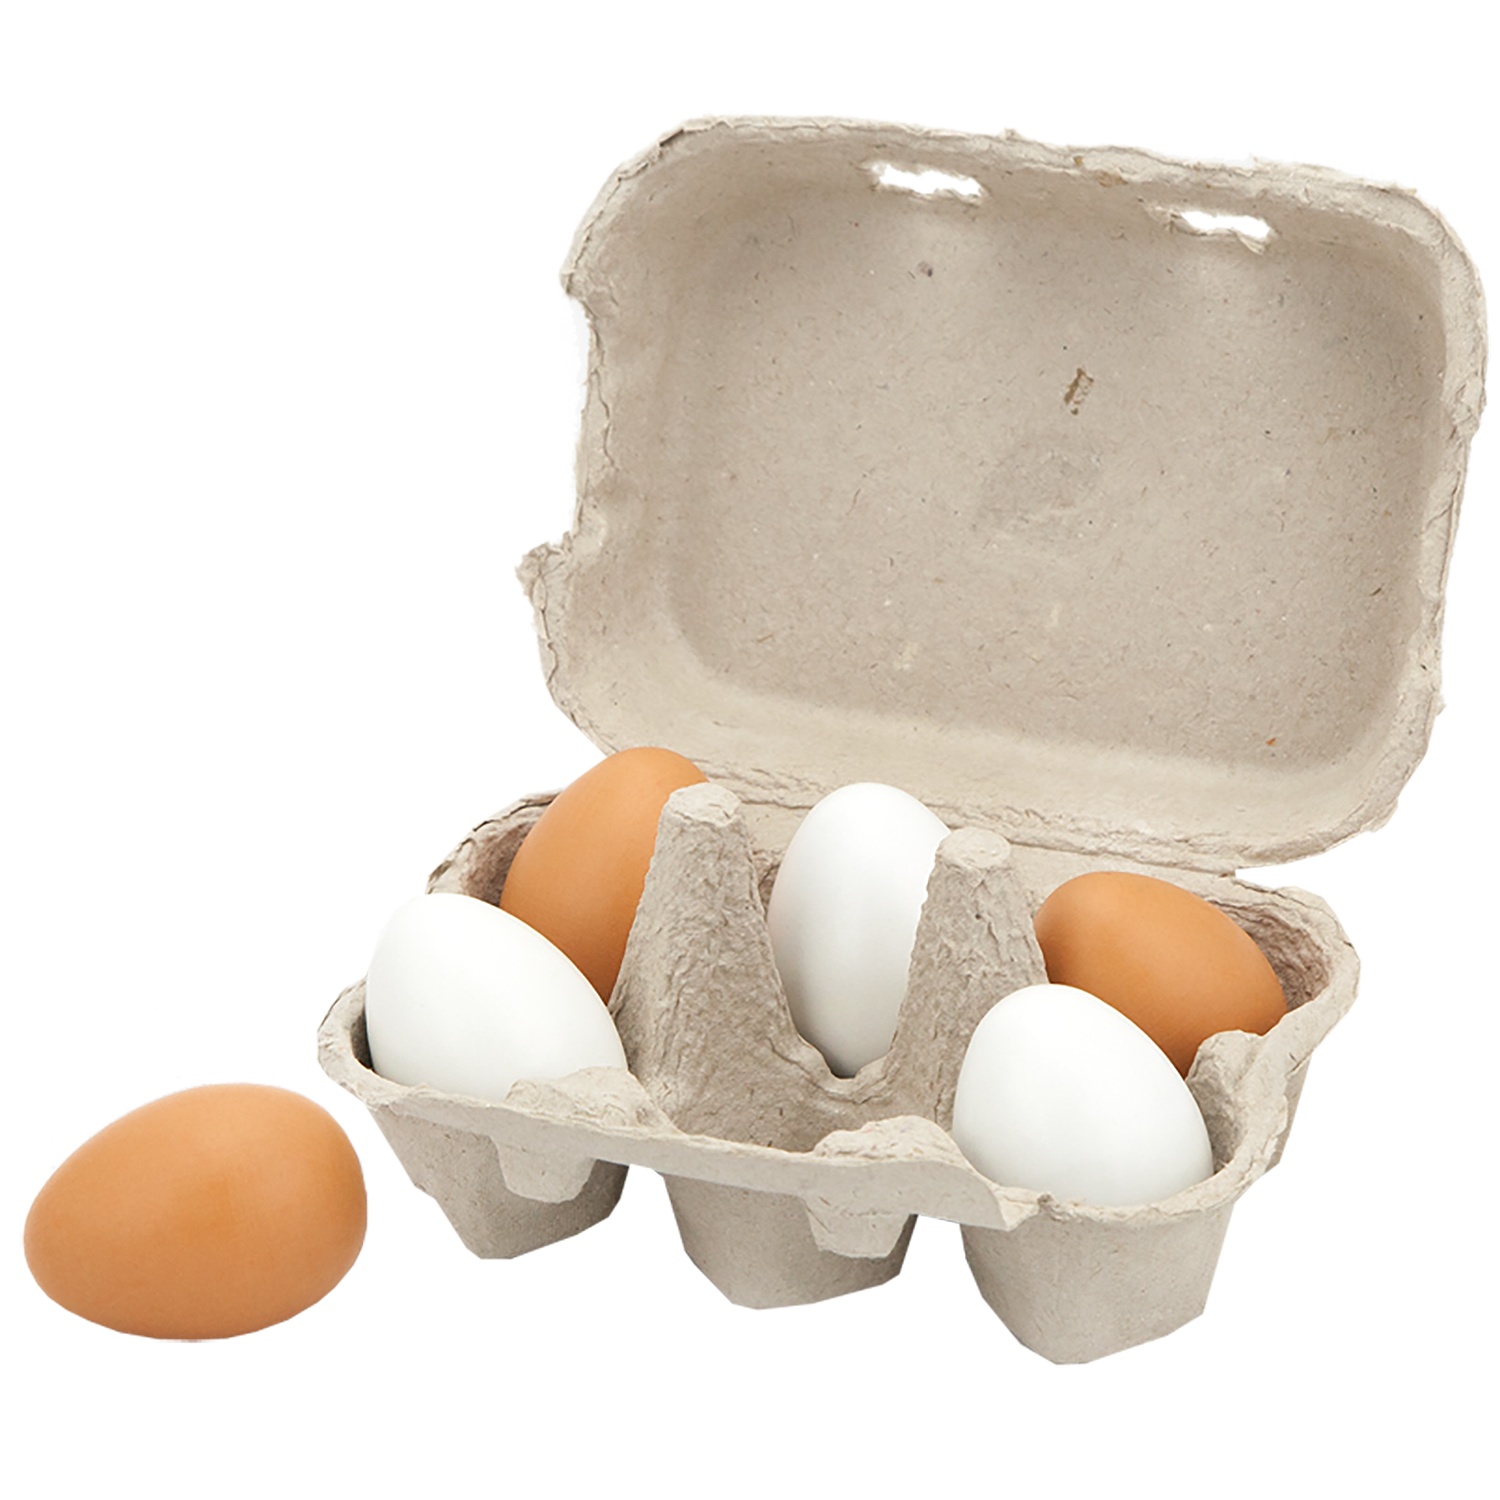 carton of 6 wooden toy eggs